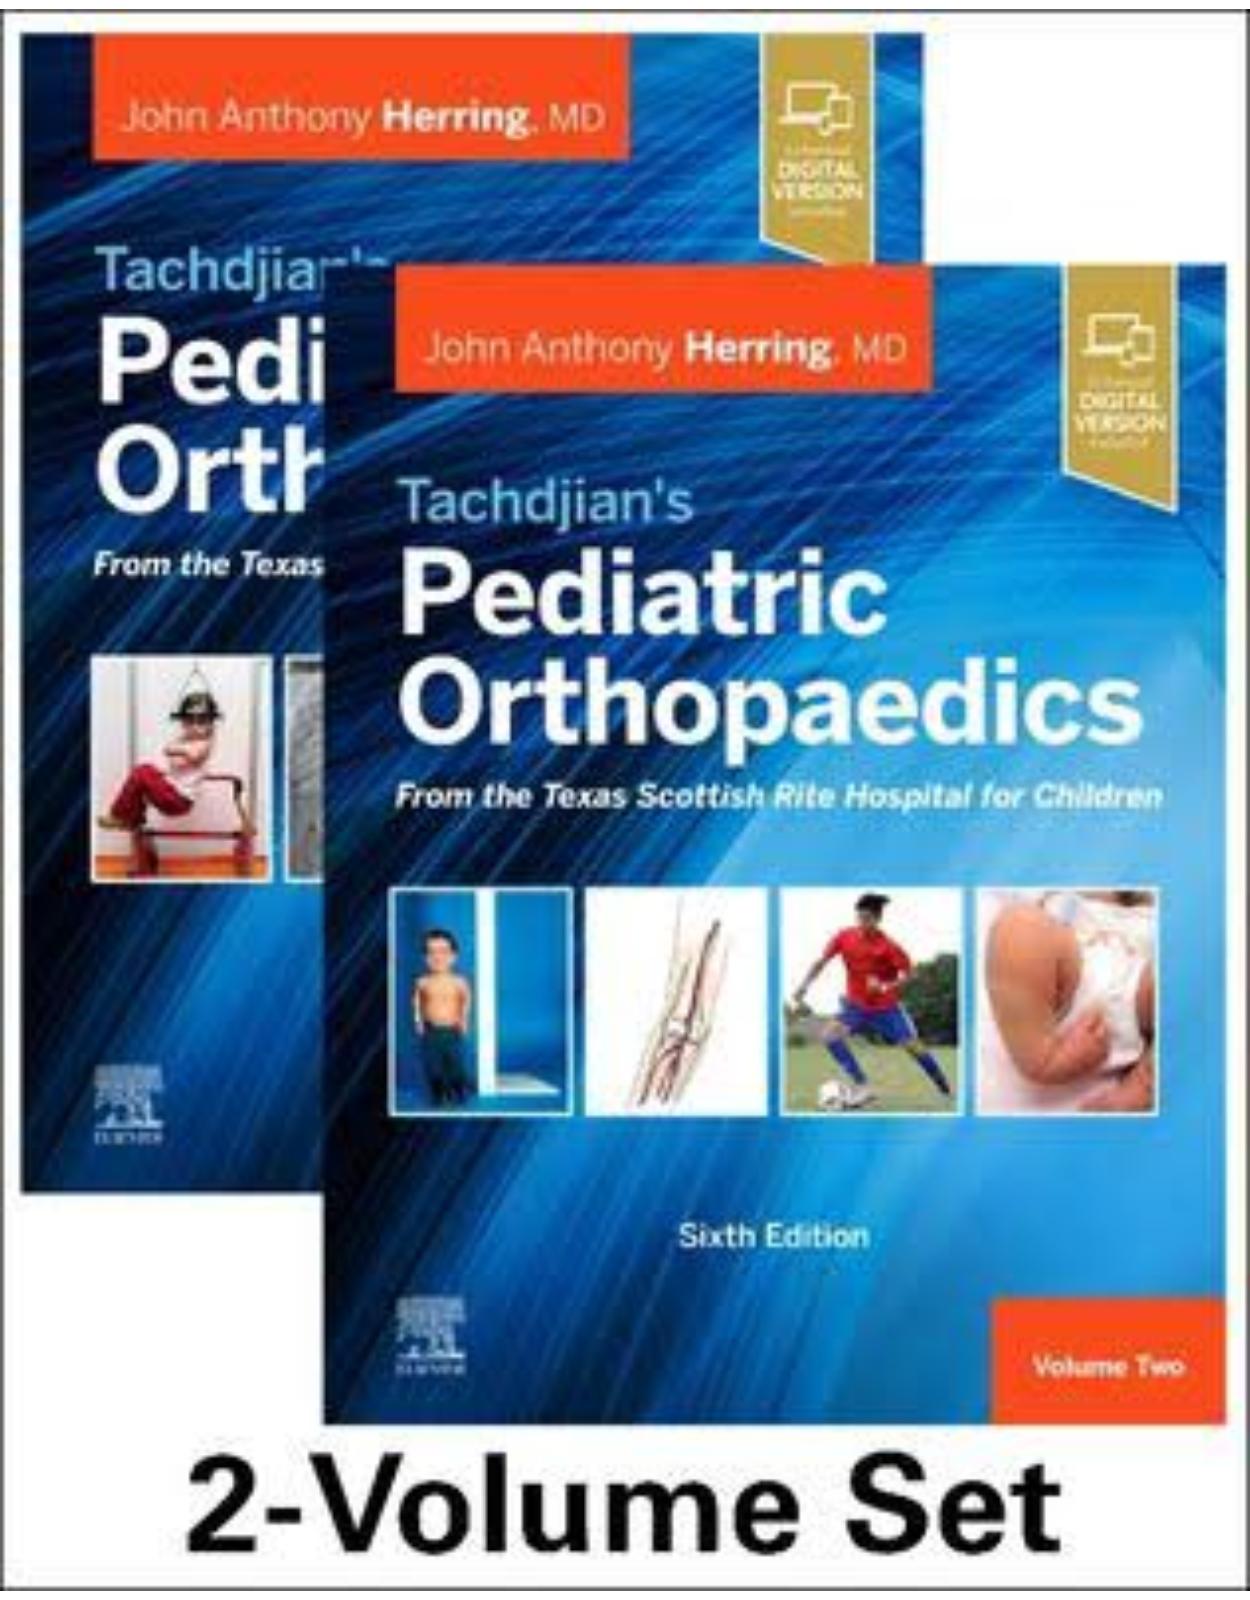 Tachdjian’s Pediatric Orthopaedics: From the Texas Scottish Rite Hospital for Children, 6th edition: 2-Volume Set 